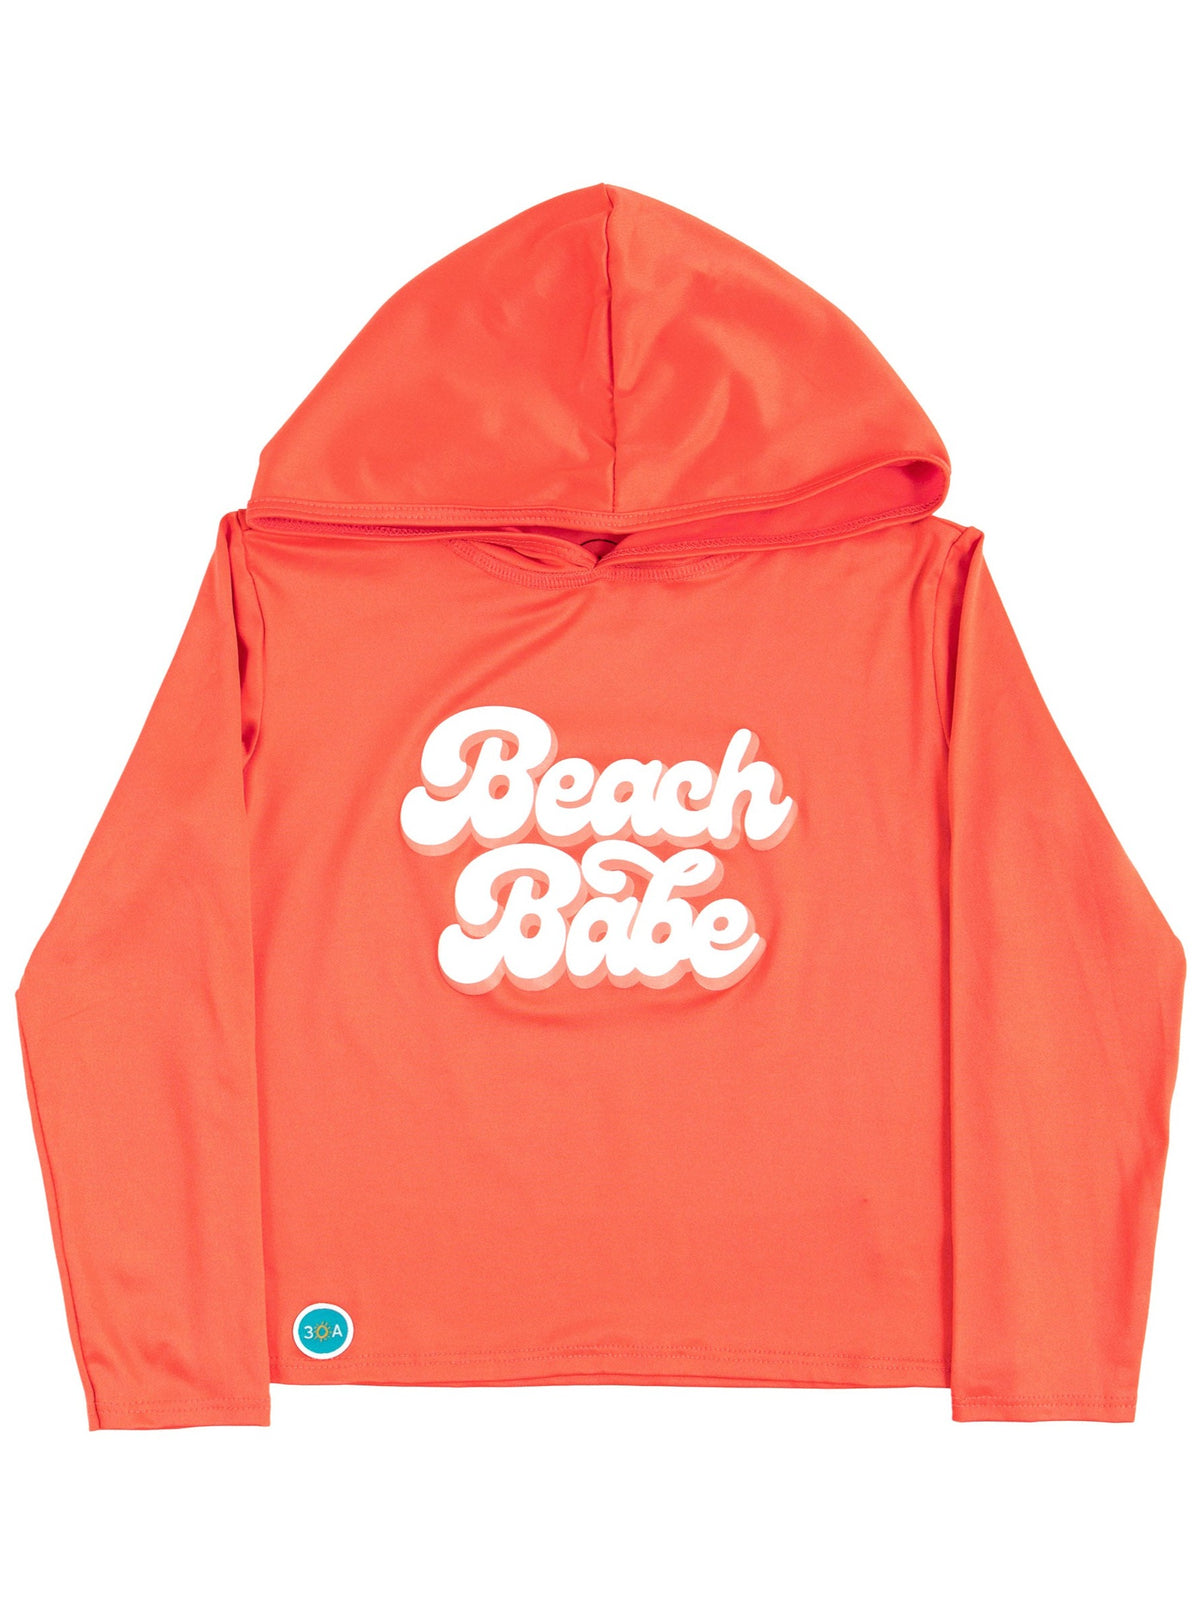 Youth Beach Babe Hooded Sun T-Shirt